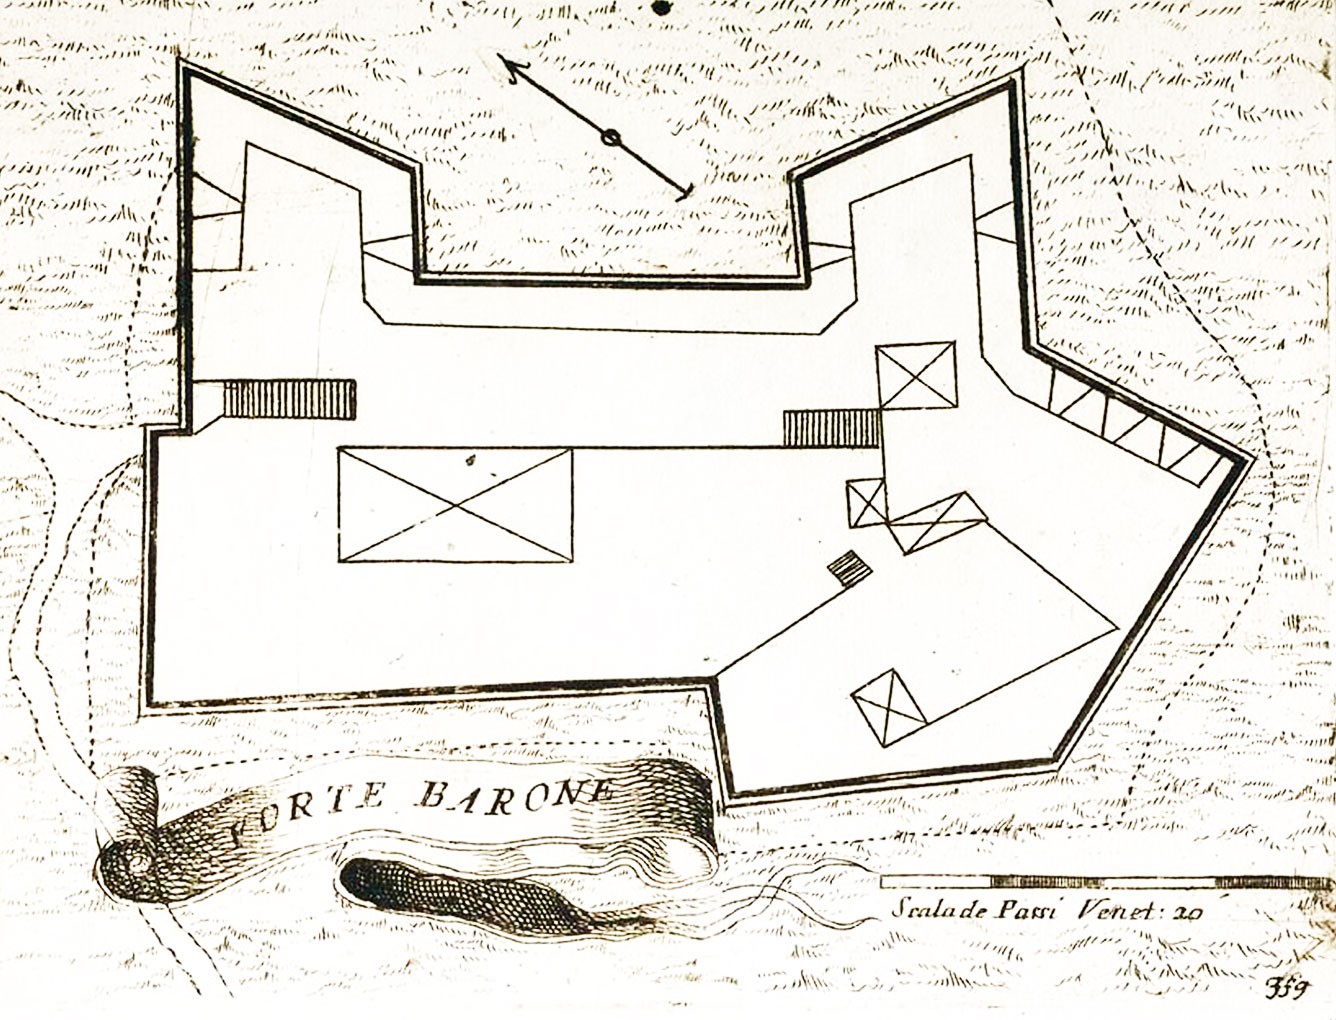 Vincenzo Maria Coronelli, ground plan of Barone Fortress, around 1688